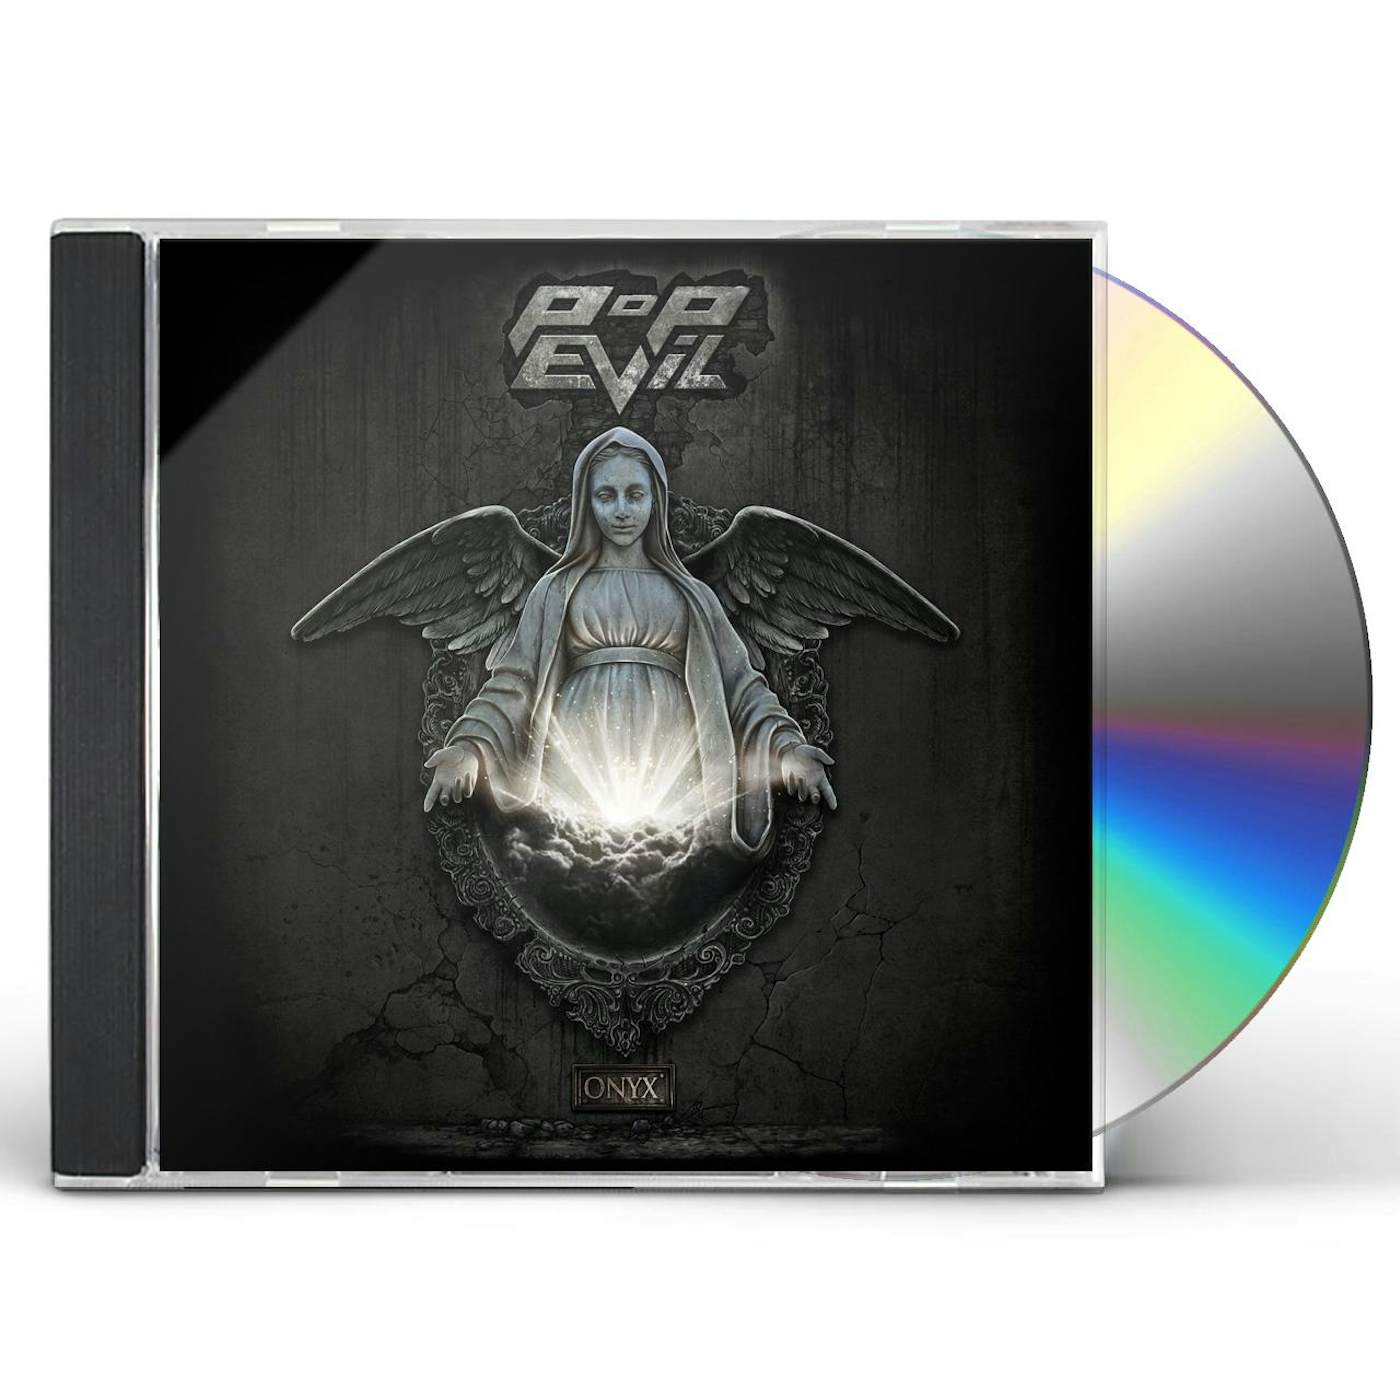 Pop Evil ONYX: EUROPEAN EXTENDED VERSION CD